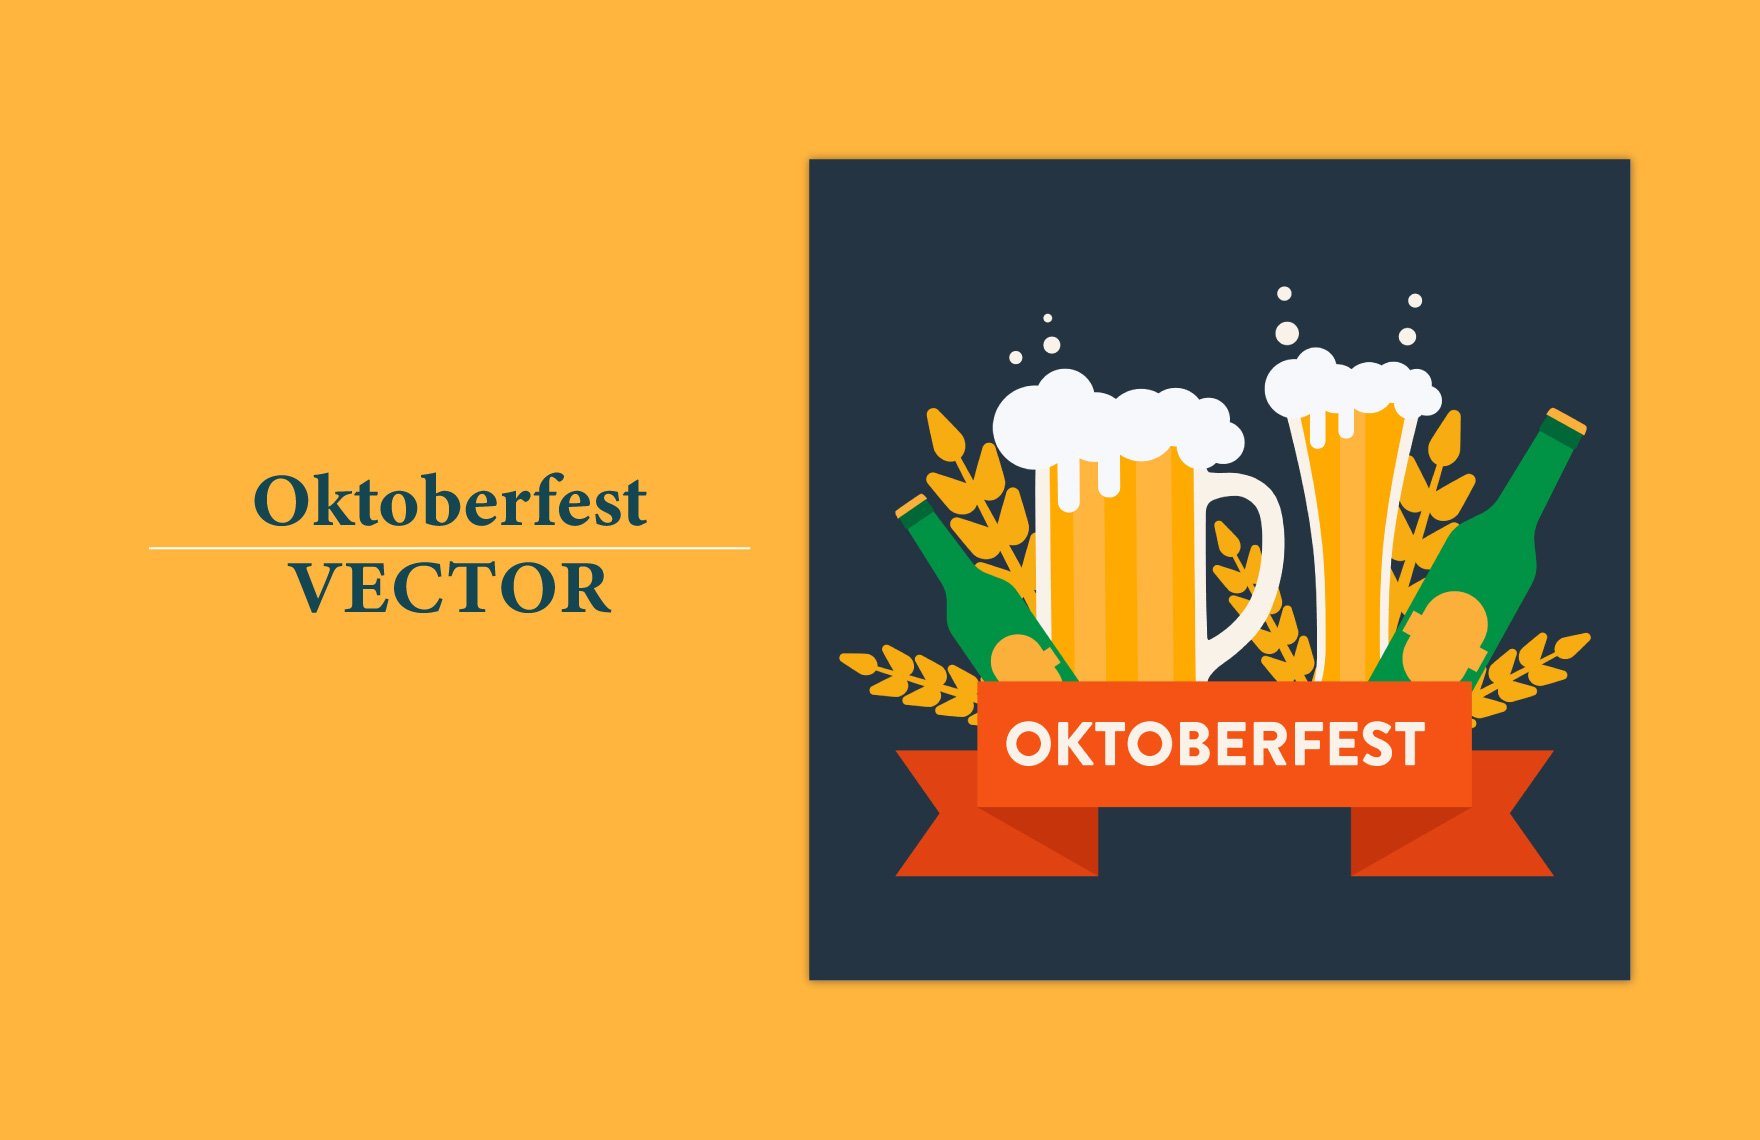 Free Oktoberfest Vector in Illustrator, PSD, EPS, SVG, JPG, PNG